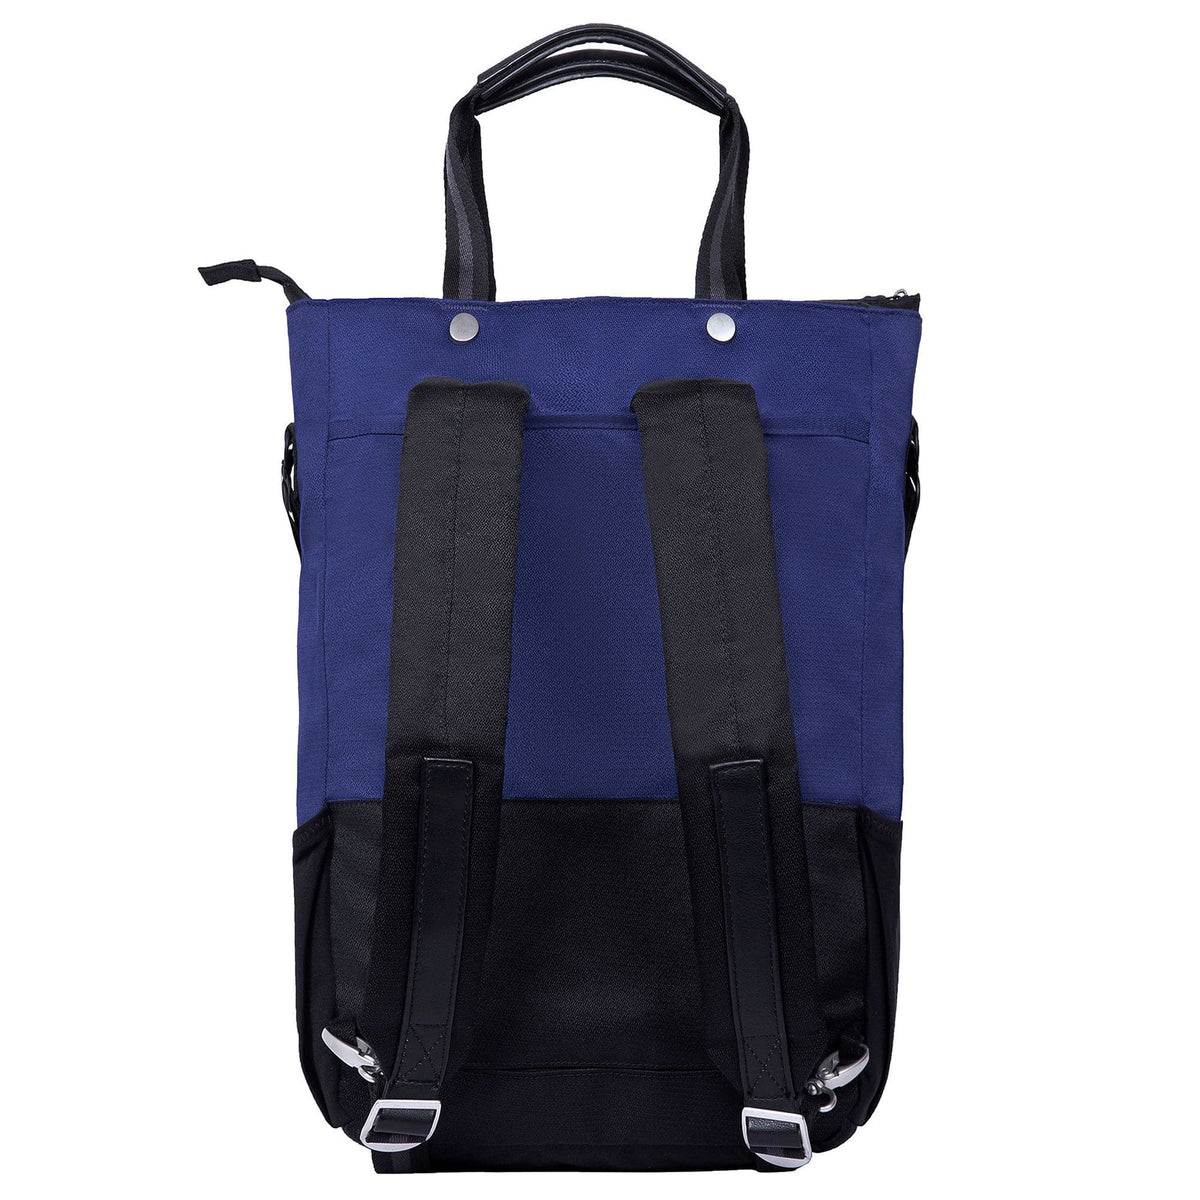 Sherpani Essentials Camden Backpack/Crossbody Bag